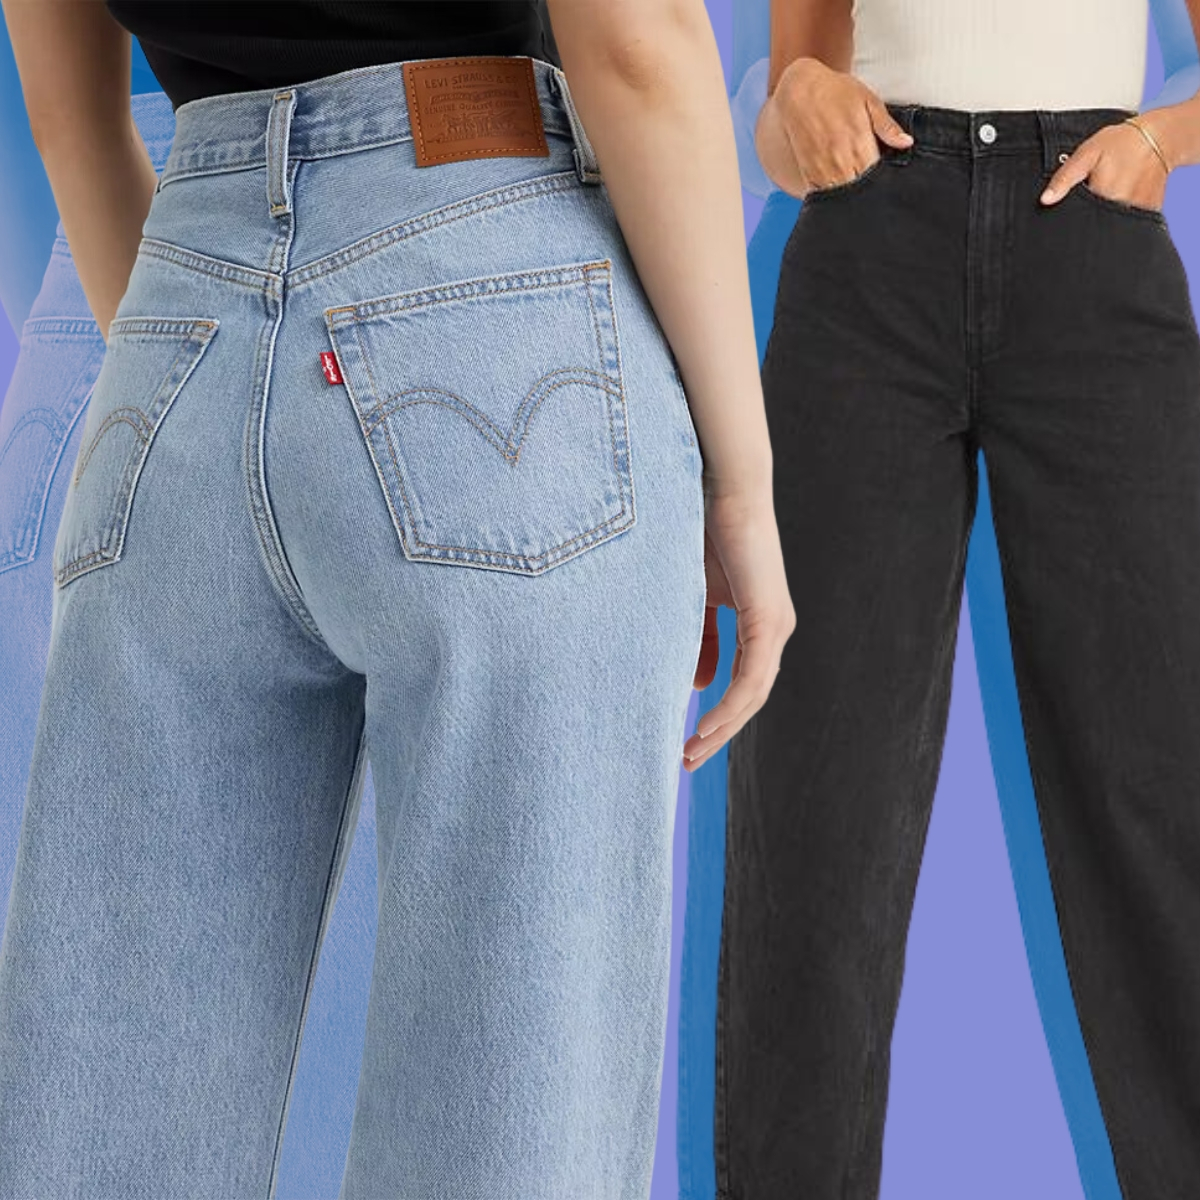 The Best Jeans & Pants for Curvy Petites 👖☁️ (High-Waist Straight Leg) 